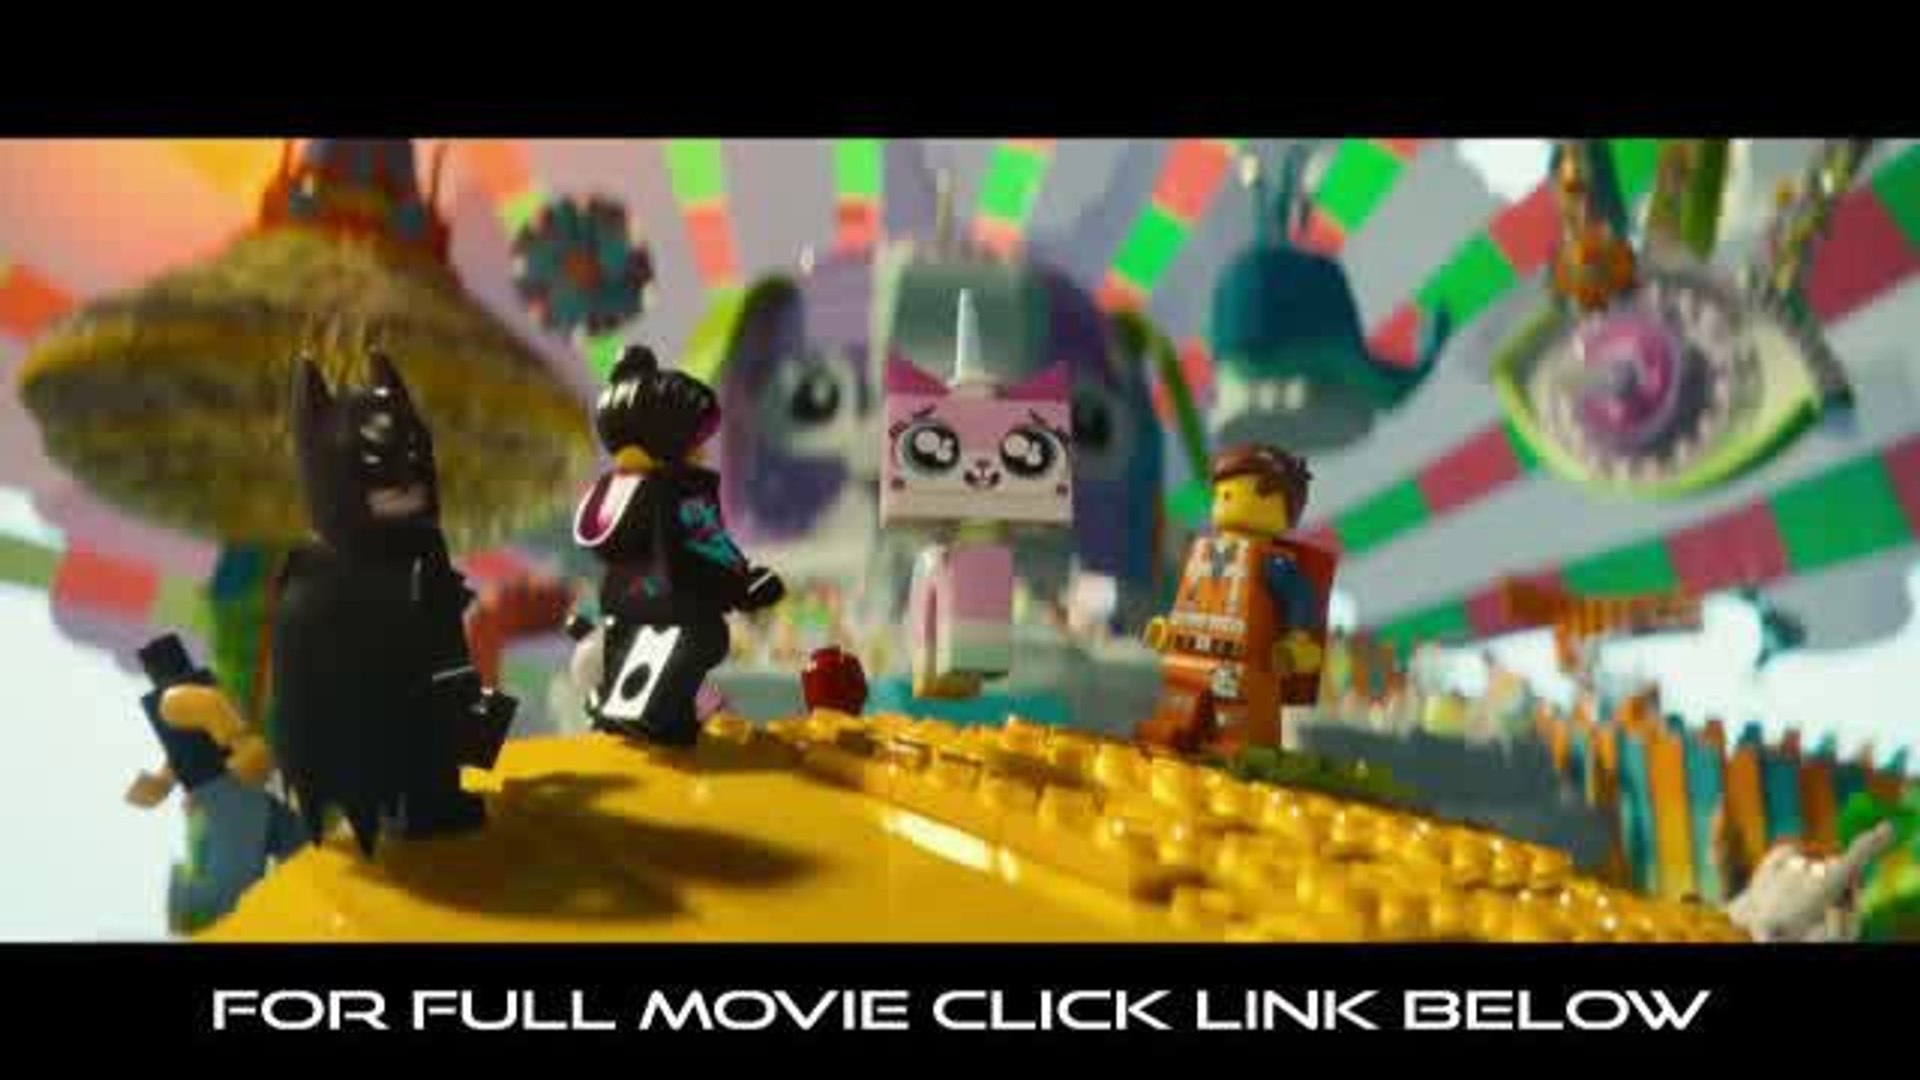 Watch Free Lego Movies: - Lego movies - Free Movies Online